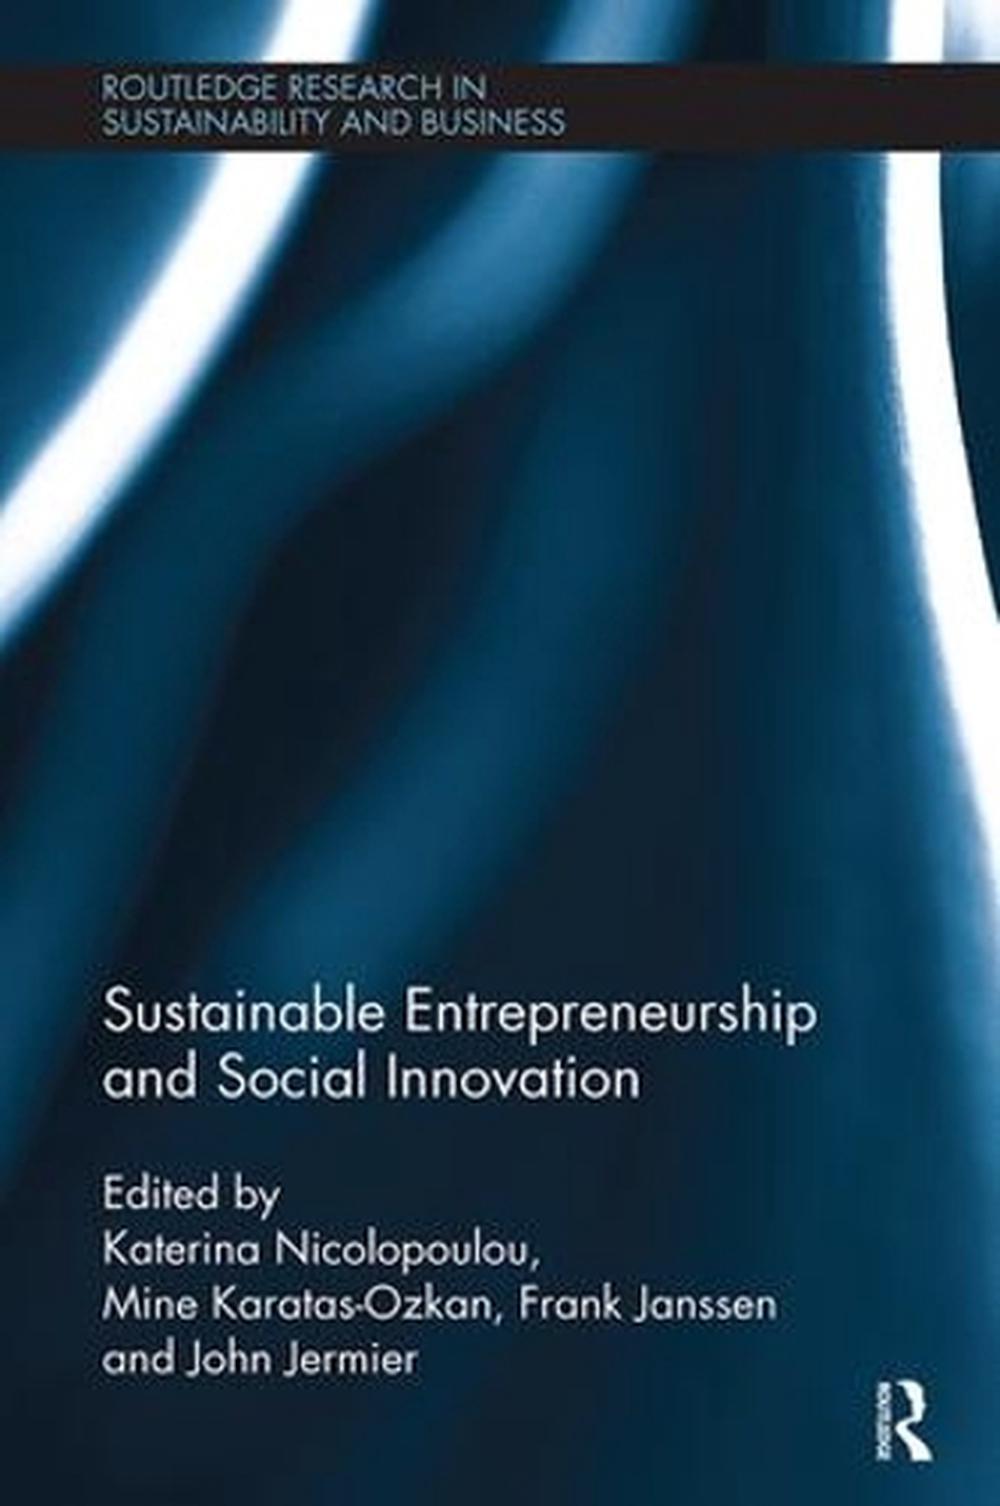 social innovation and entrepreneurship case study